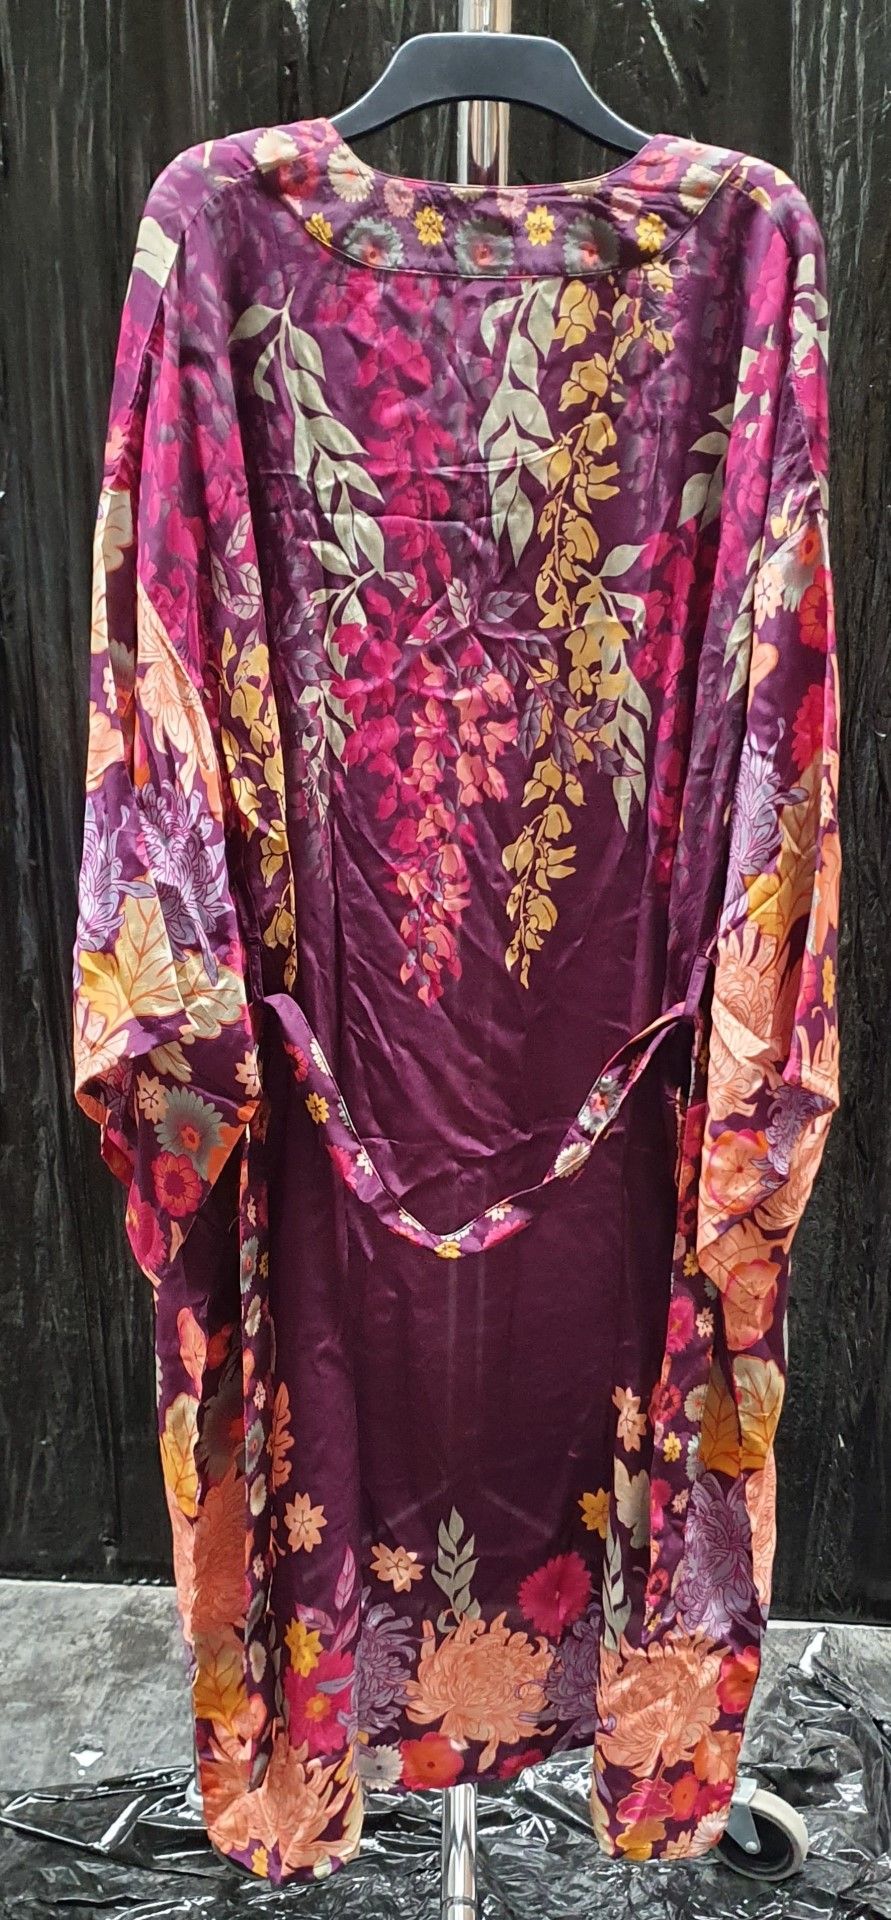 4 x Powder Kimono Style Gowns- Folk Art Petal Finish 100% Viscose Fabric - Adult One Size - New - Image 3 of 11